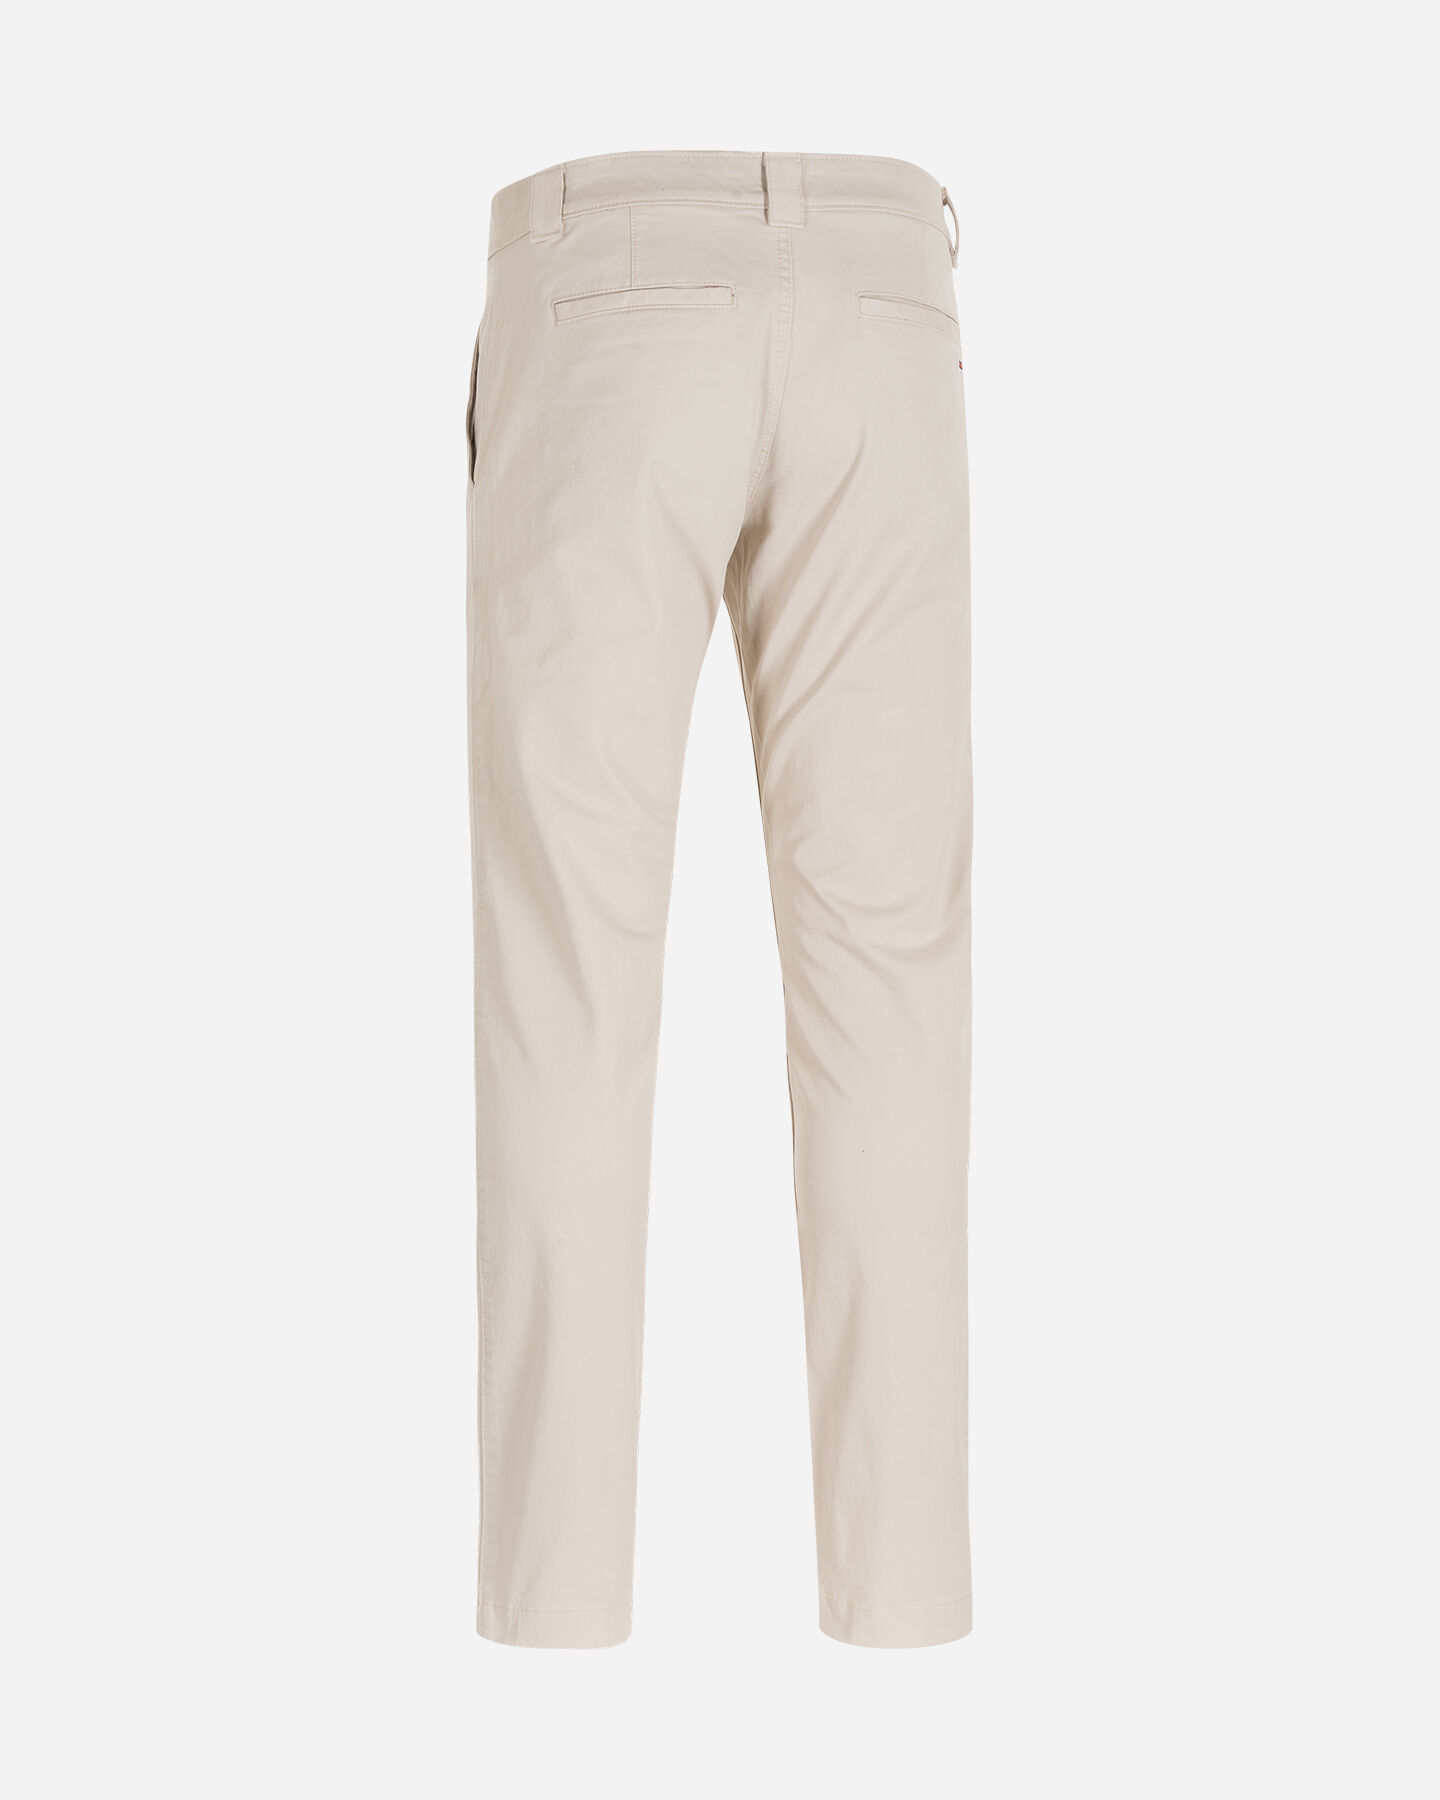  Pantalone TOMMY HILFIGER SCANTON CHINO M S4109990|PEG|32 scatto 1